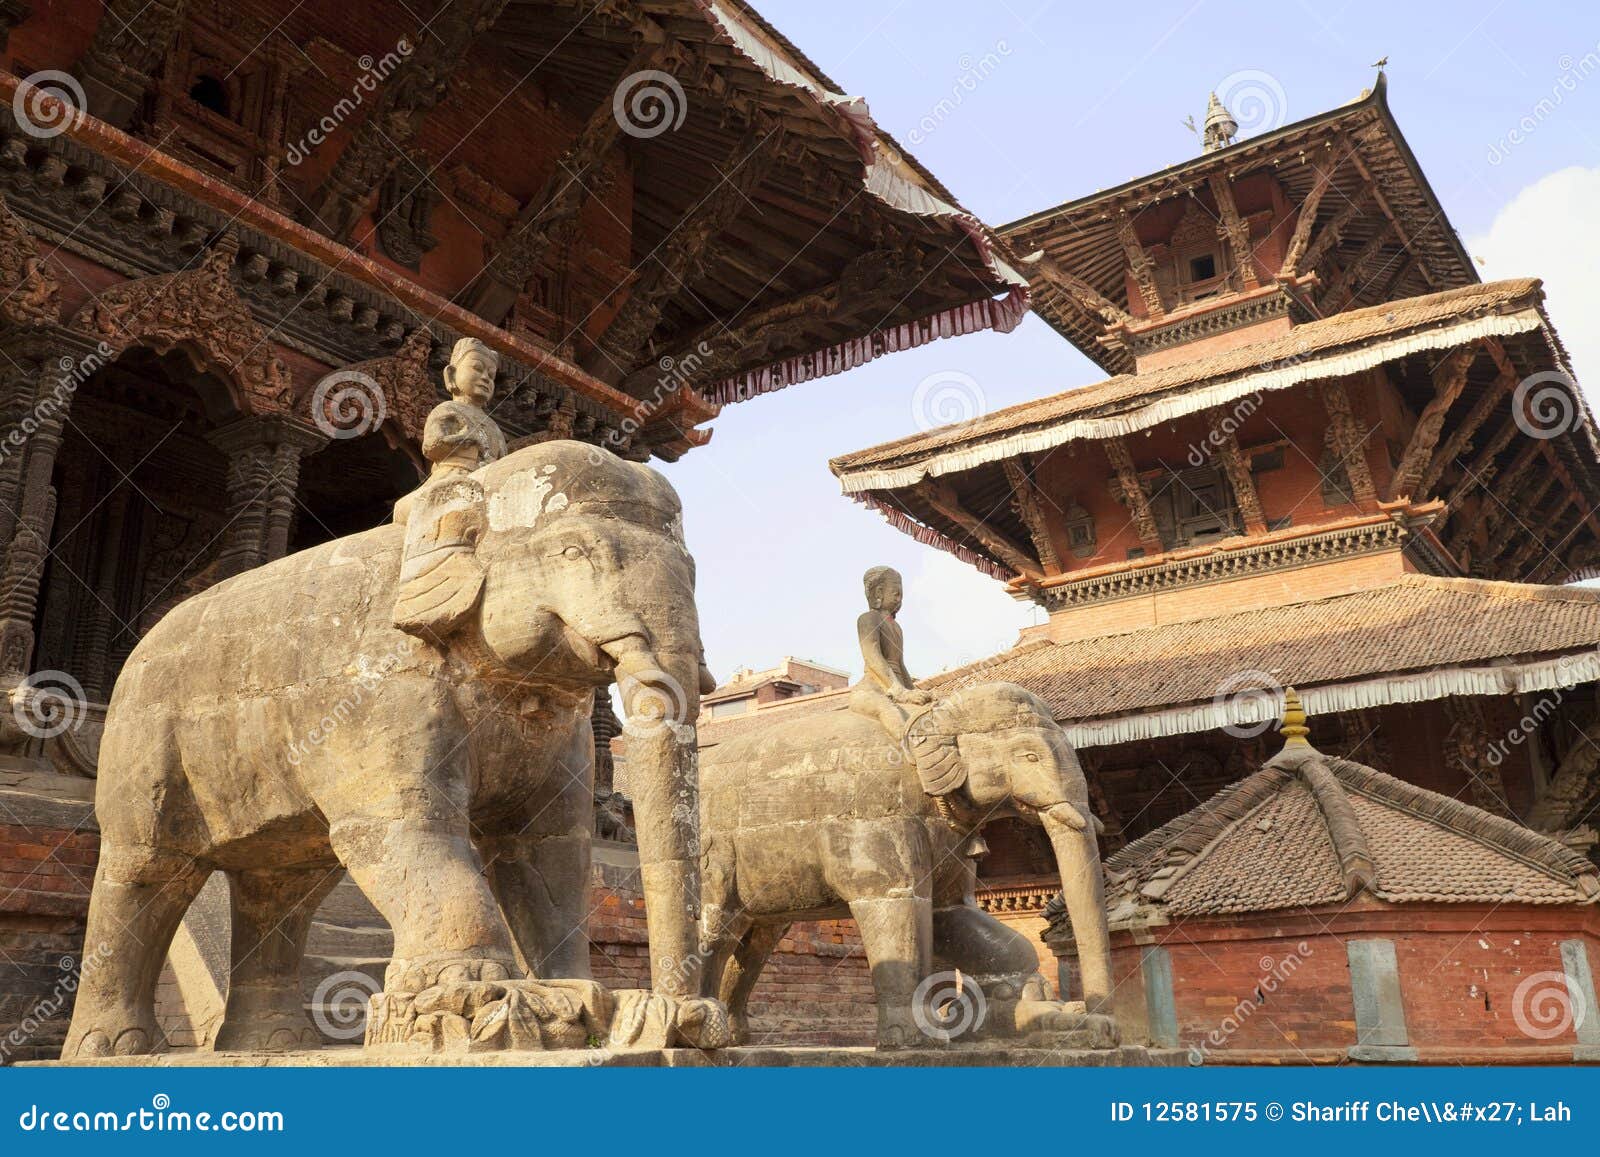 patan durbar square, nepal